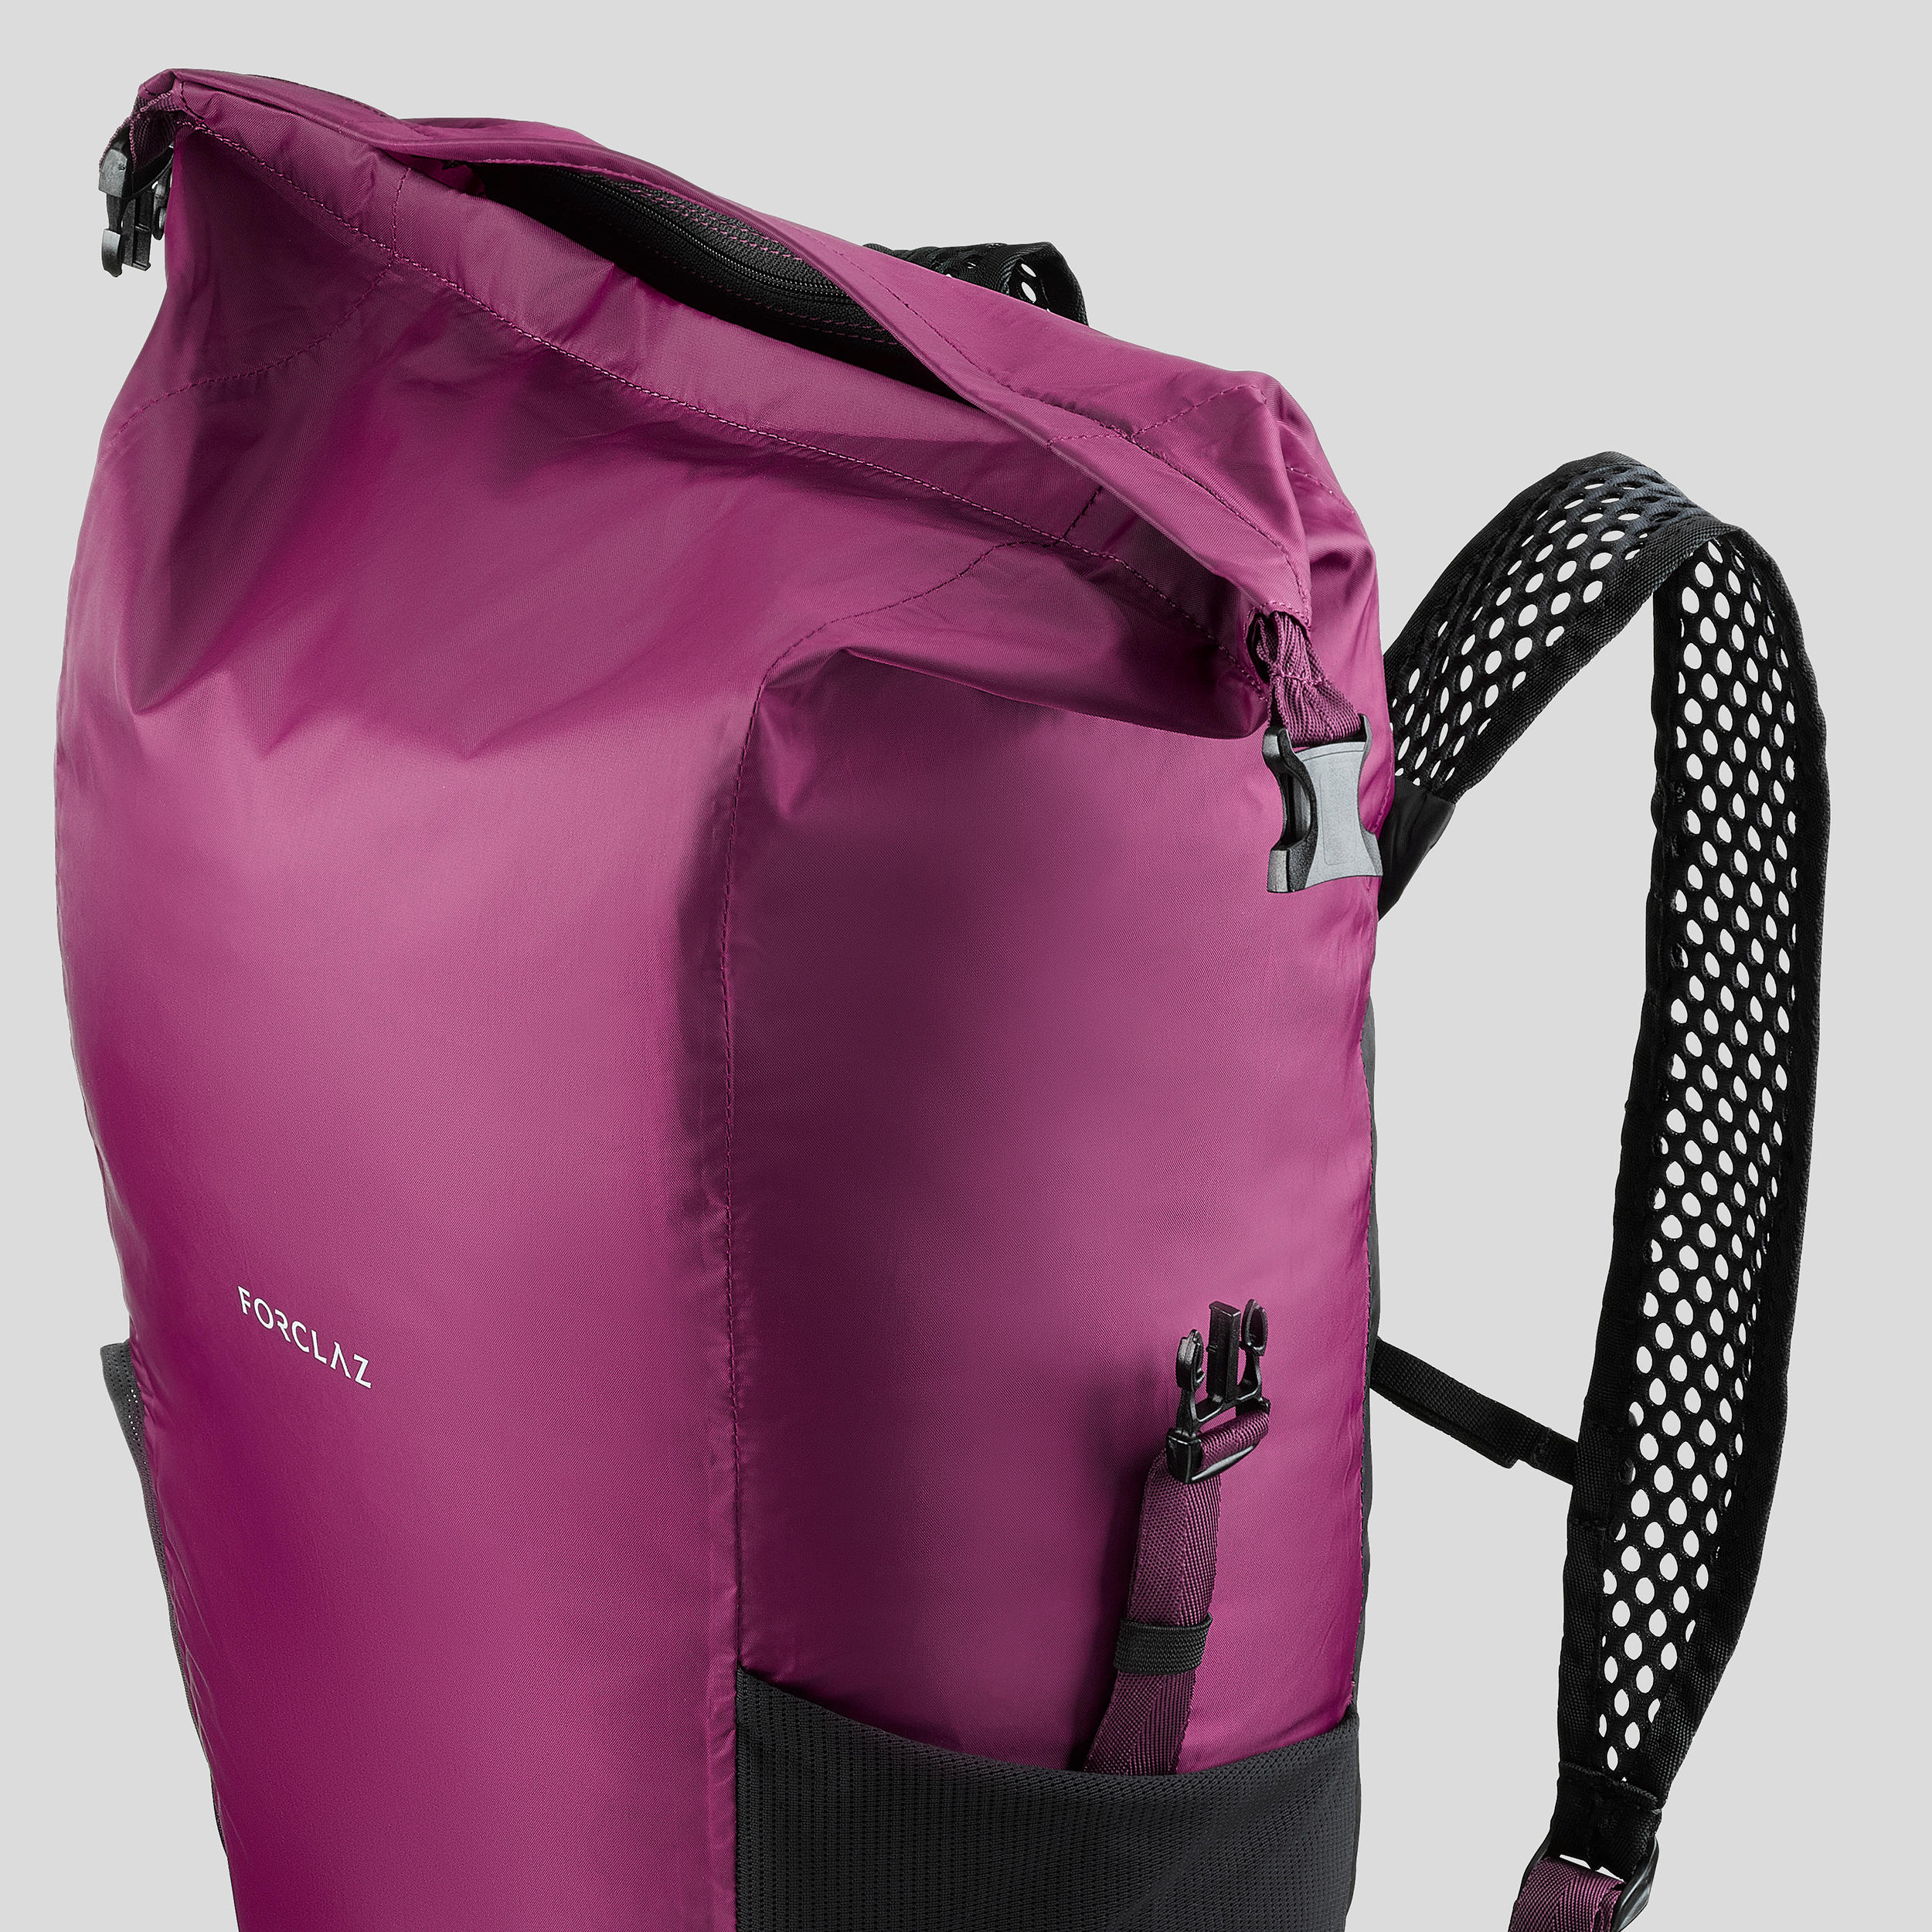 Waterproof foldable backpack 20L - Travel 6/8